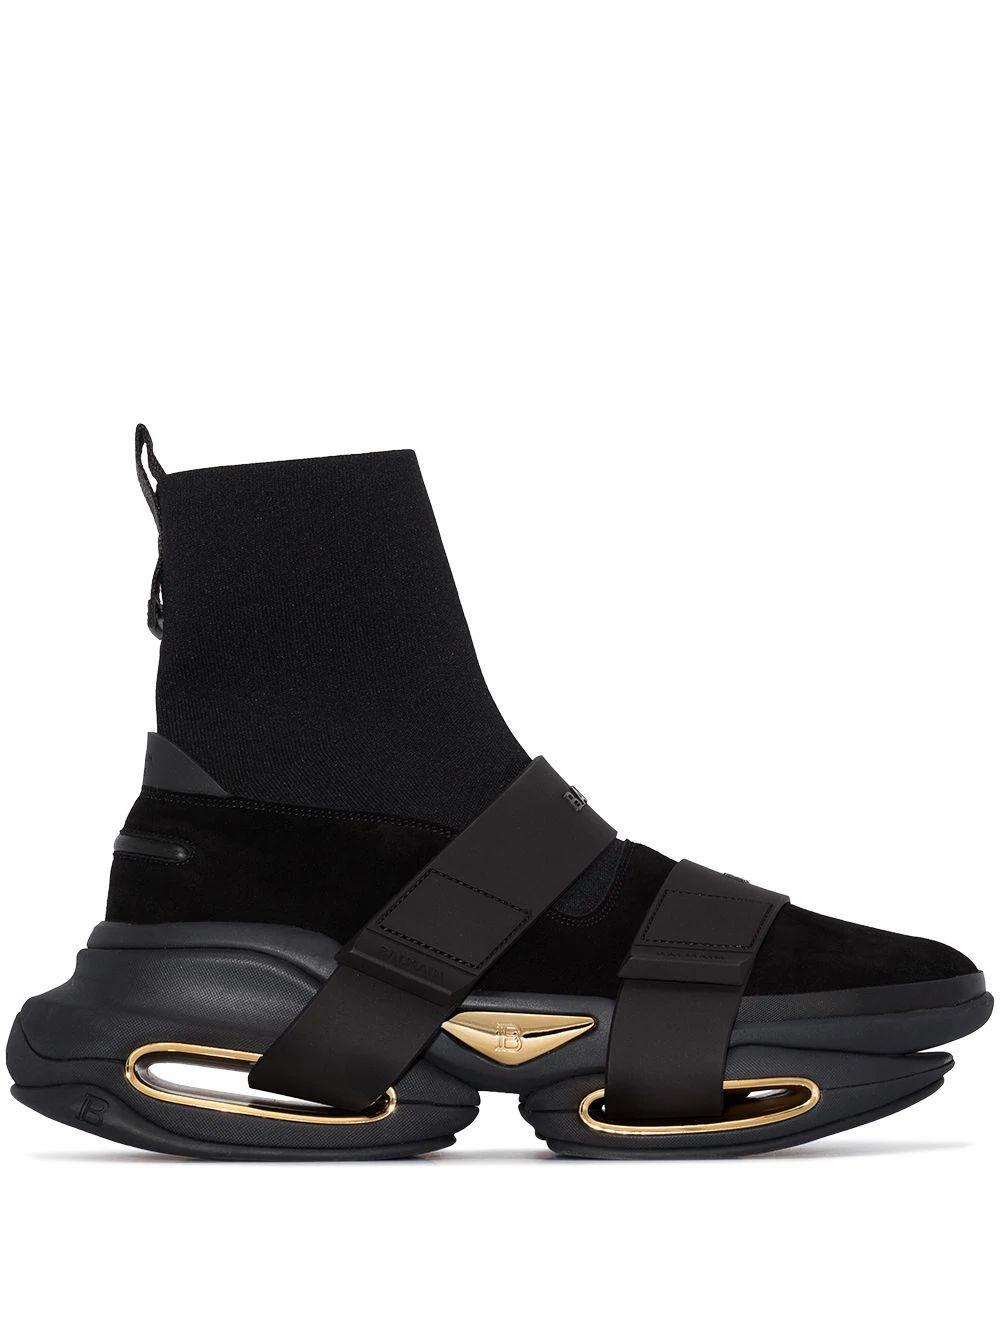 Balmain Synthetic Polyester Hi Top Sneakers in Black for Men - Lyst